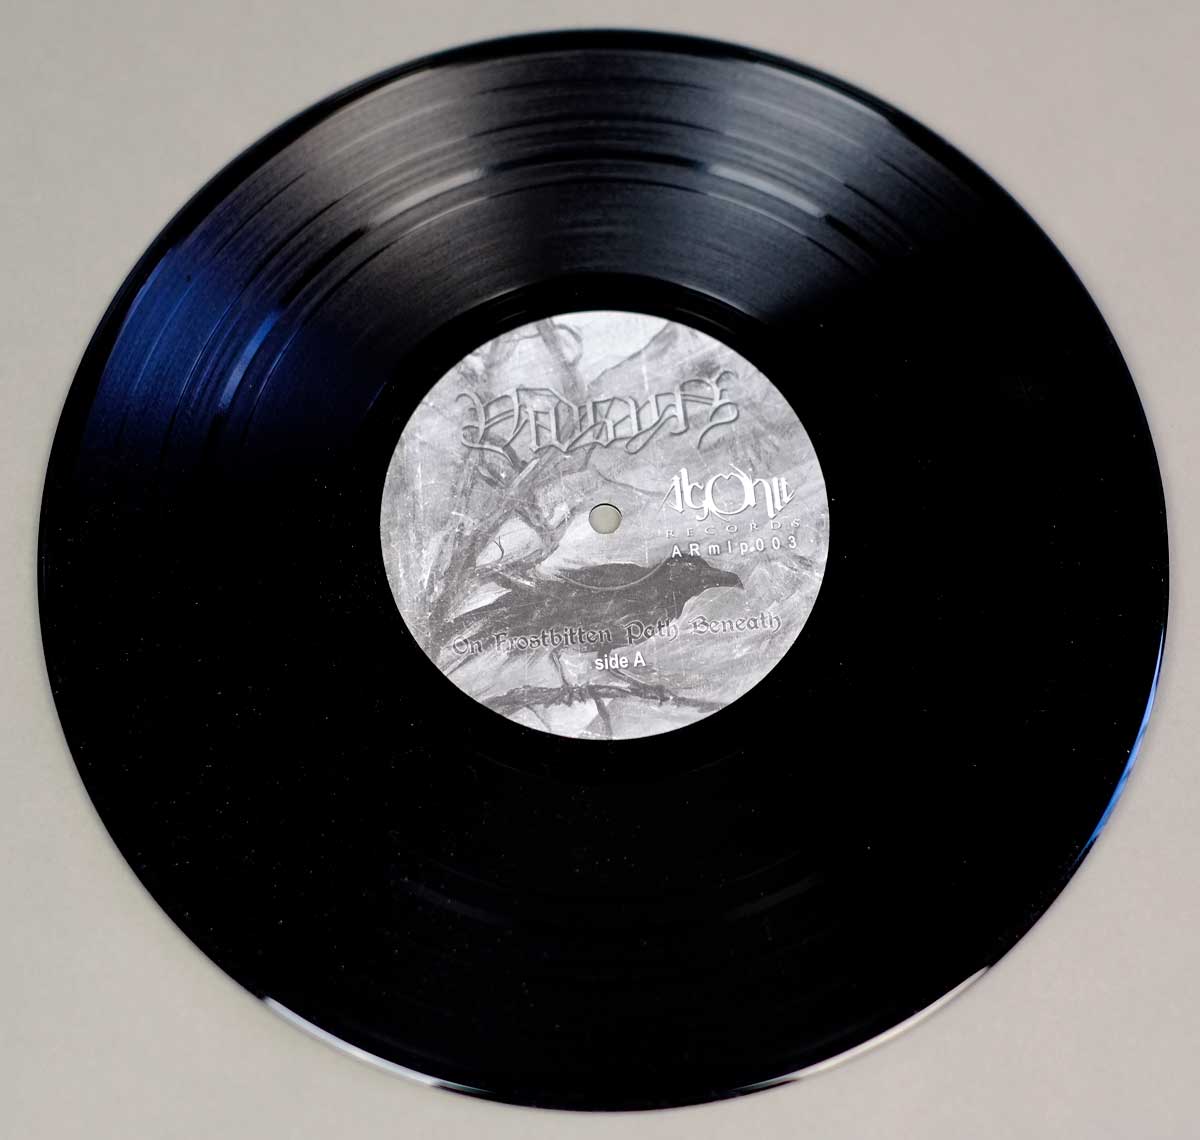 Photo of 12" LP Record Side One VIDSYN	- On Frostbitten Path Beneath   Vinyl Record Store https://vinyl-records.nl//